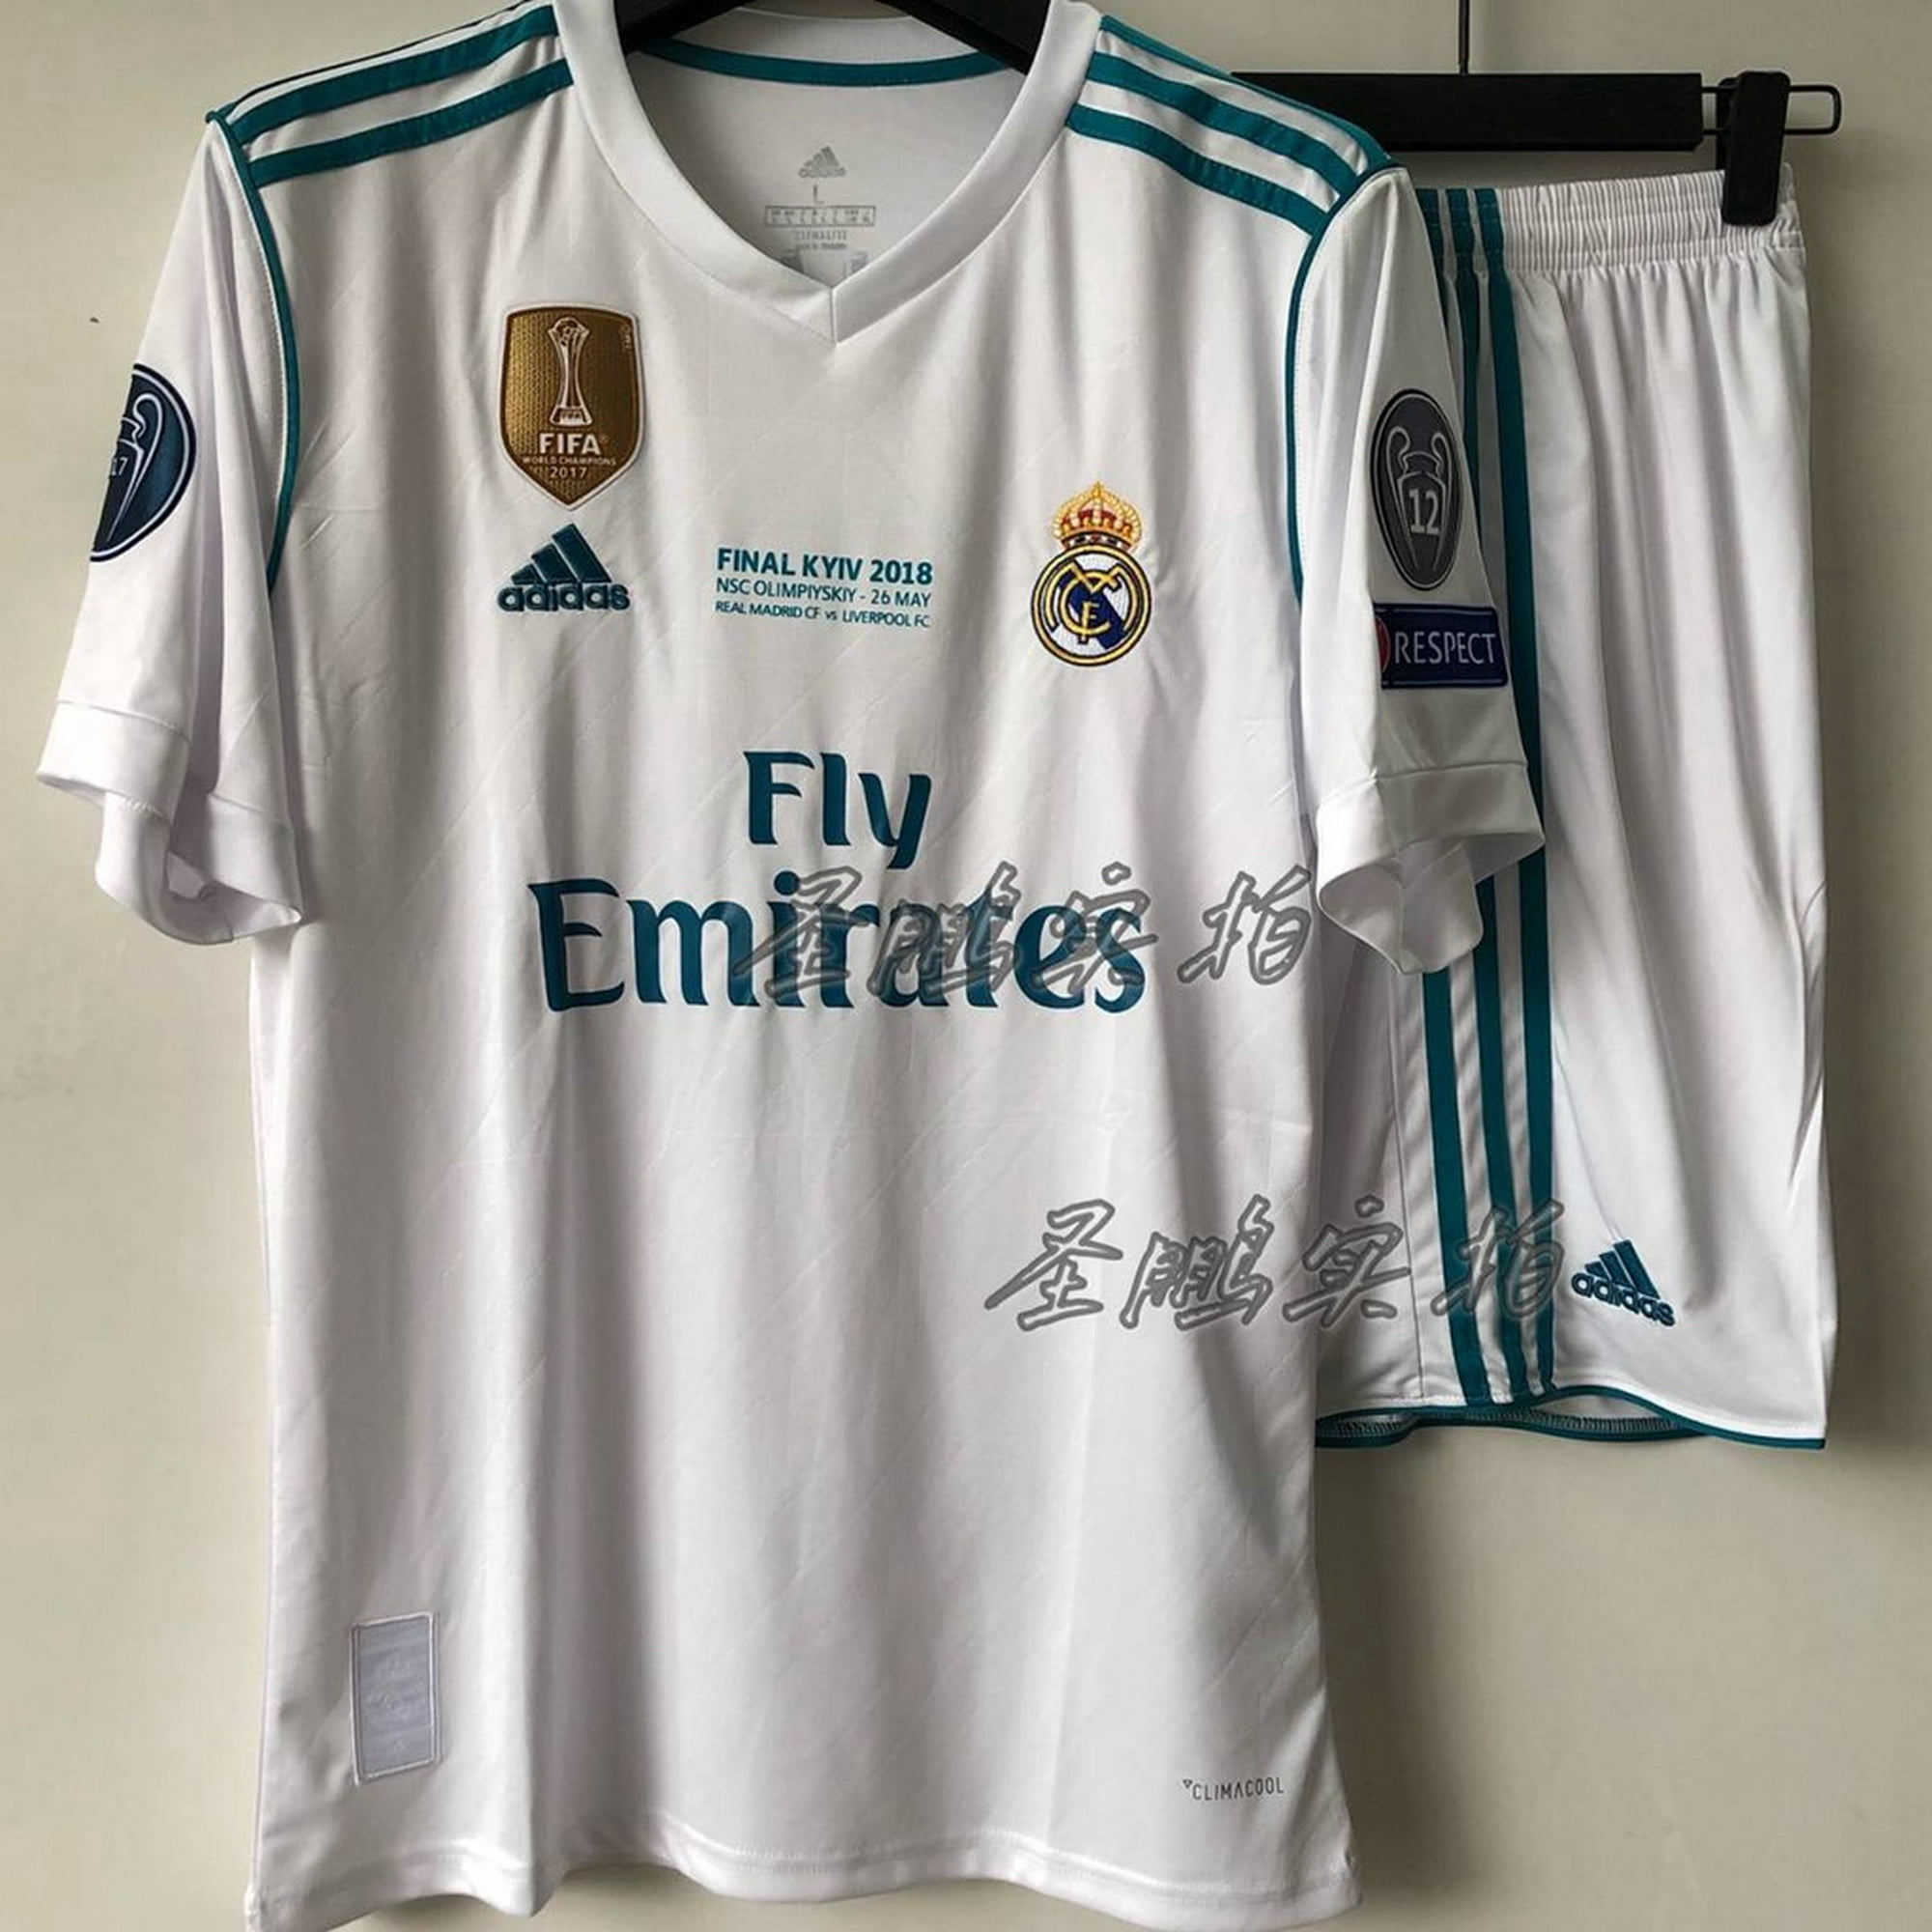 Camiseta De Fútbol Real Madrid (Cristiano Ronaldo 7) Azul Manga